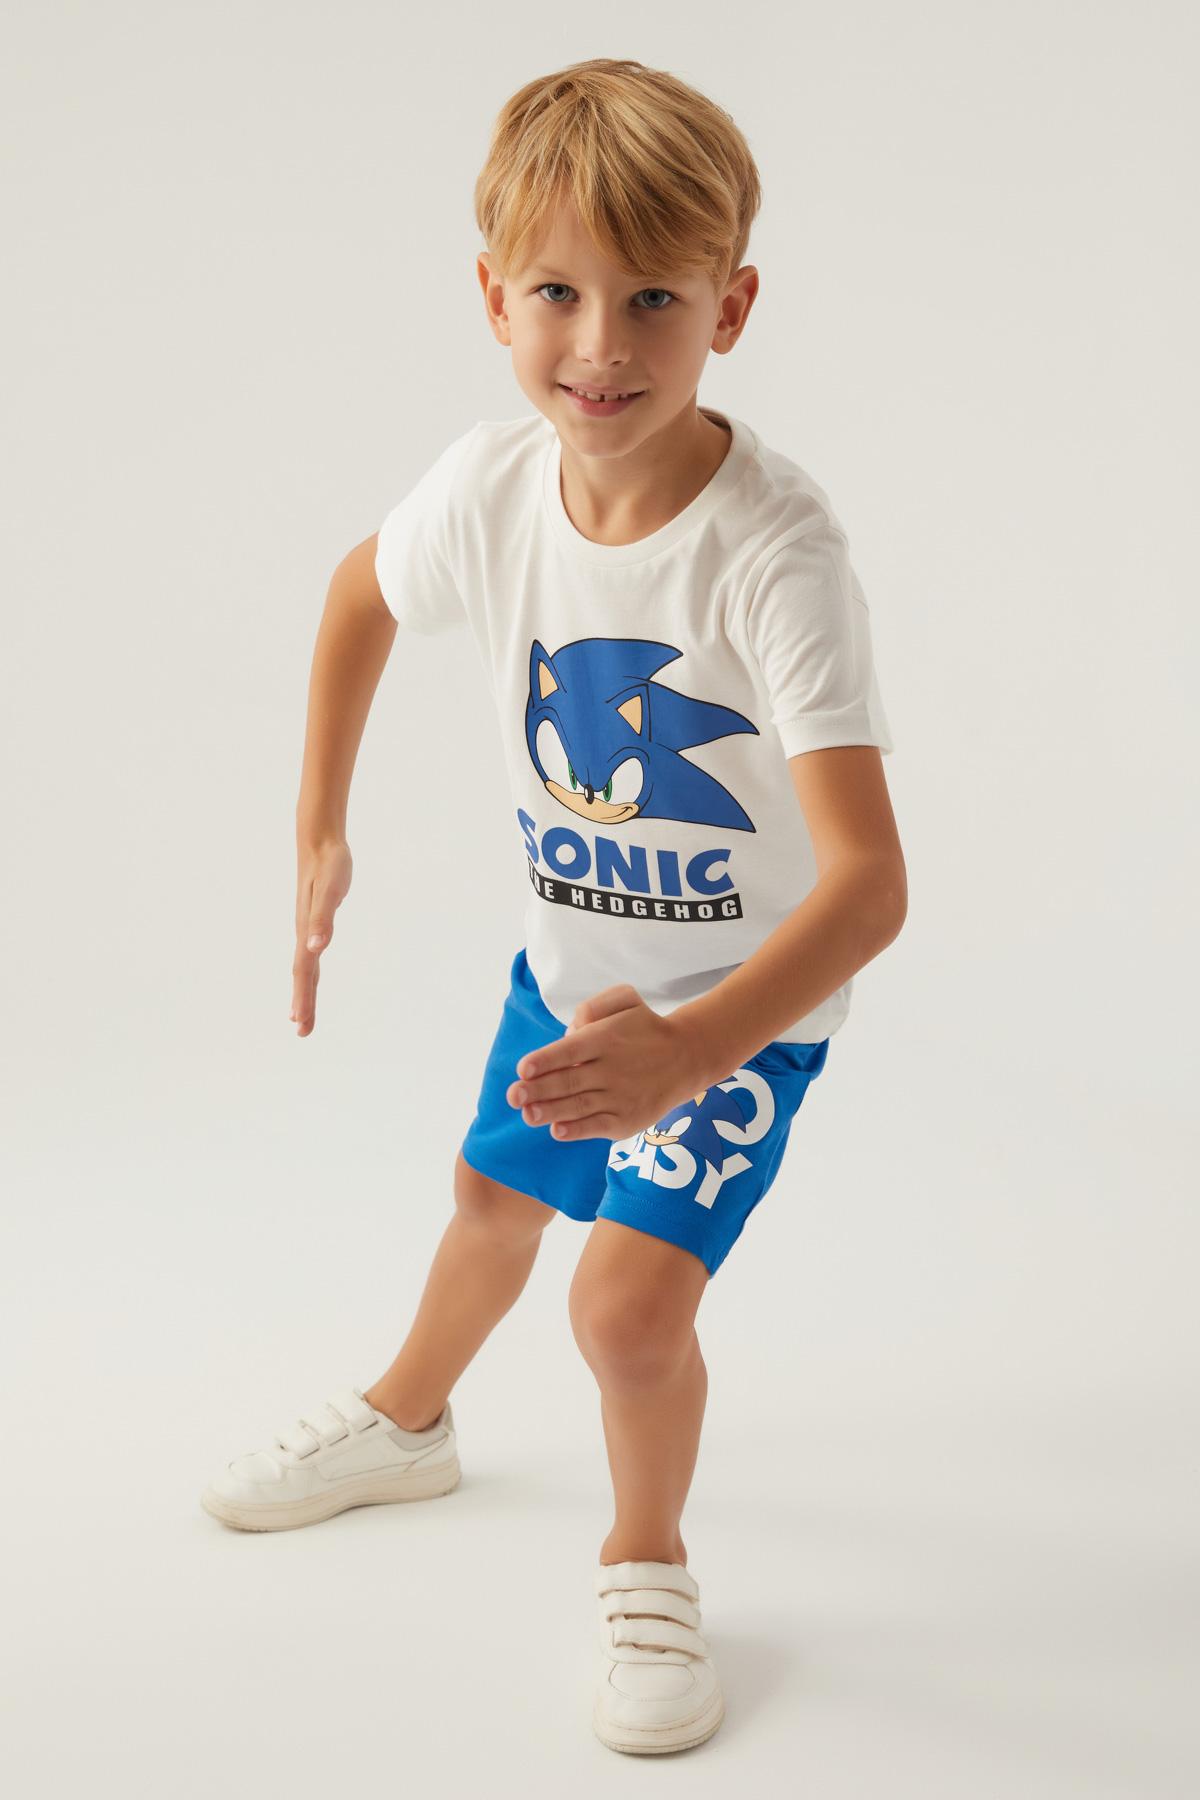 Selected image for U.S. Polo Assn. Modern Sonic Komplet za dečake L1697-3, Plavo-beli